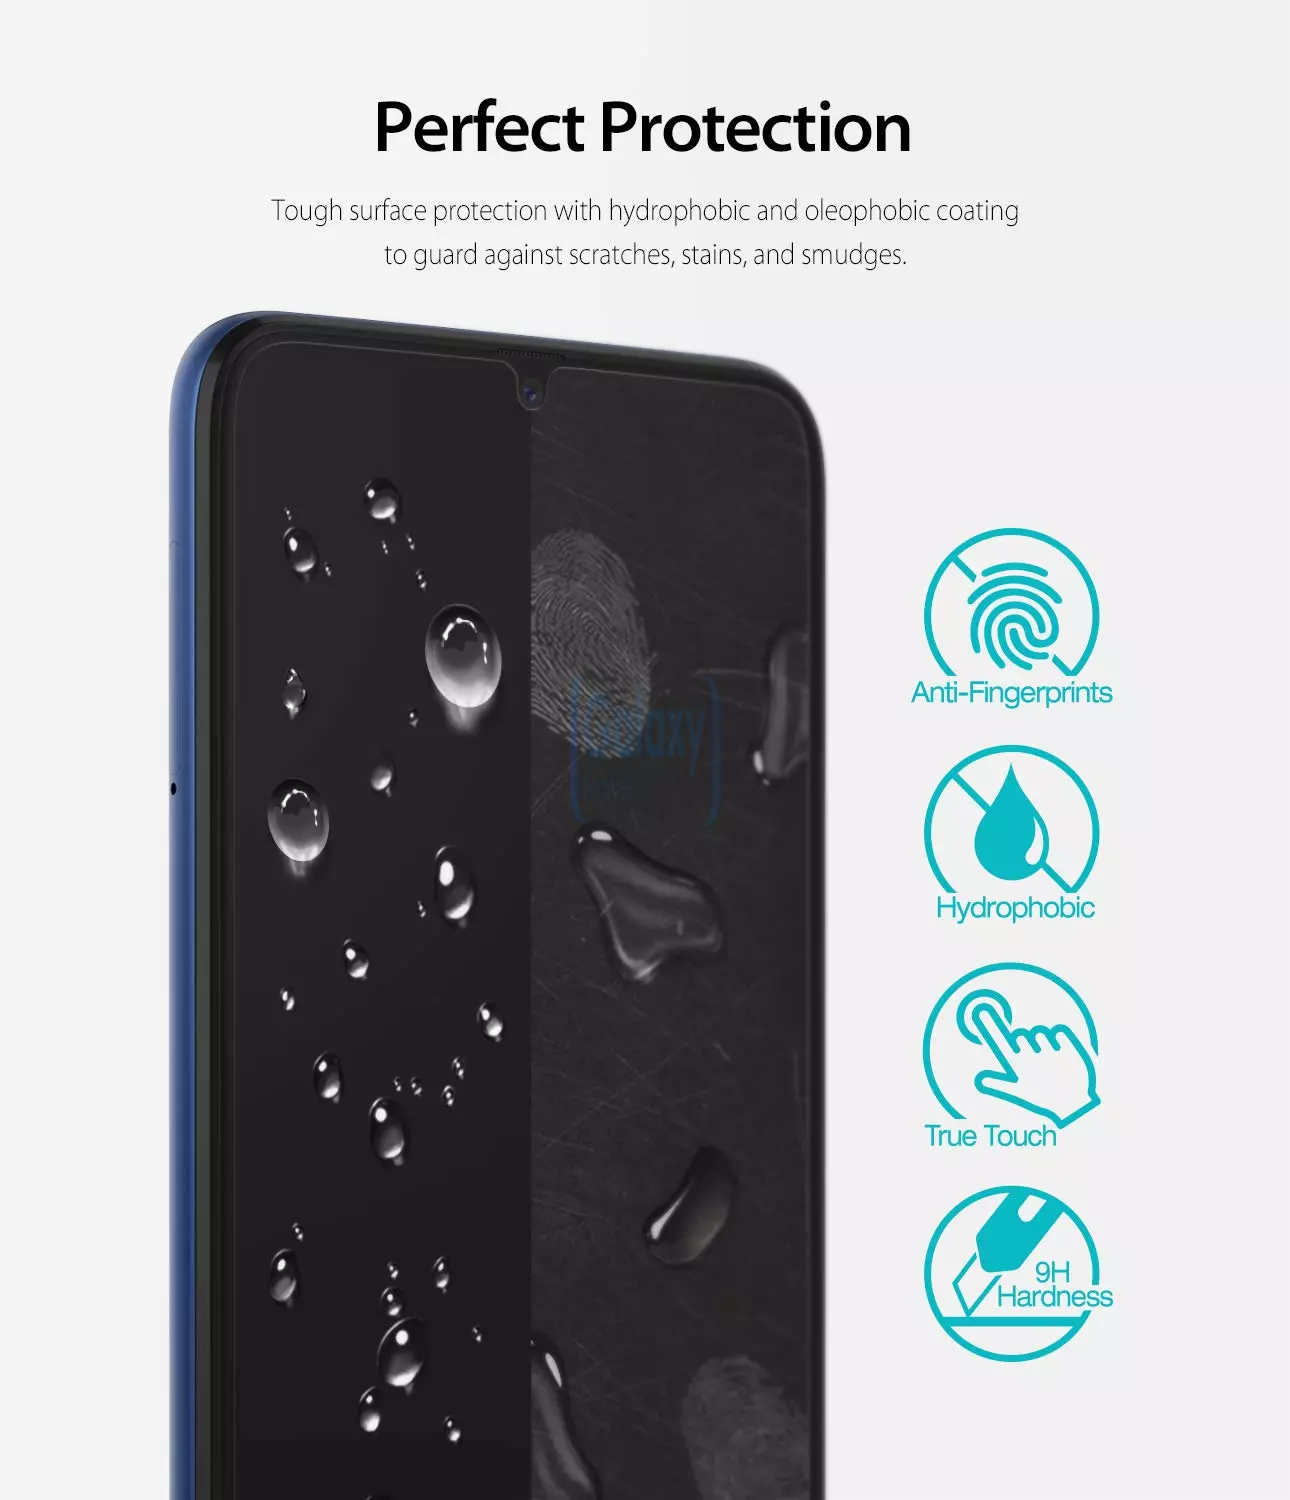 Защитное стекло Ringke Invisible Deffender Glass 3 шт. для Samsung Galaxy A20